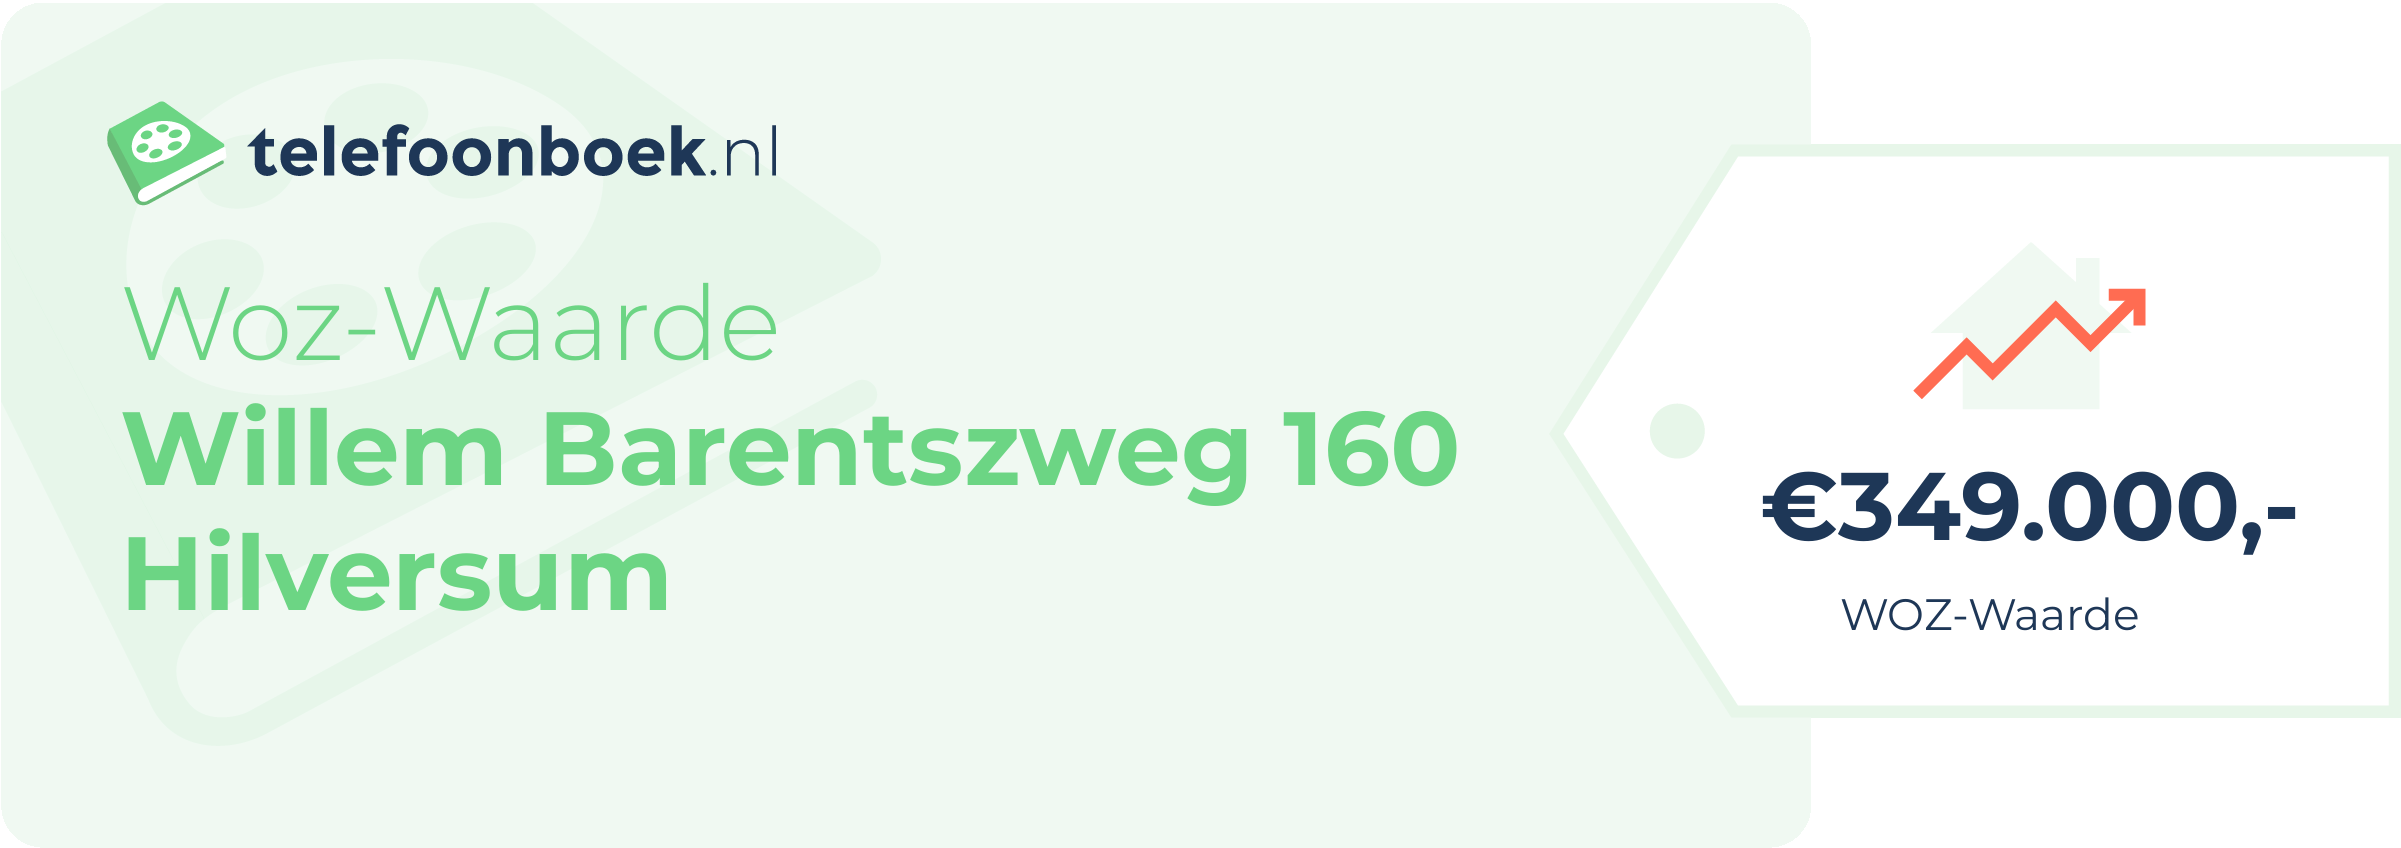 WOZ-waarde Willem Barentszweg 160 Hilversum